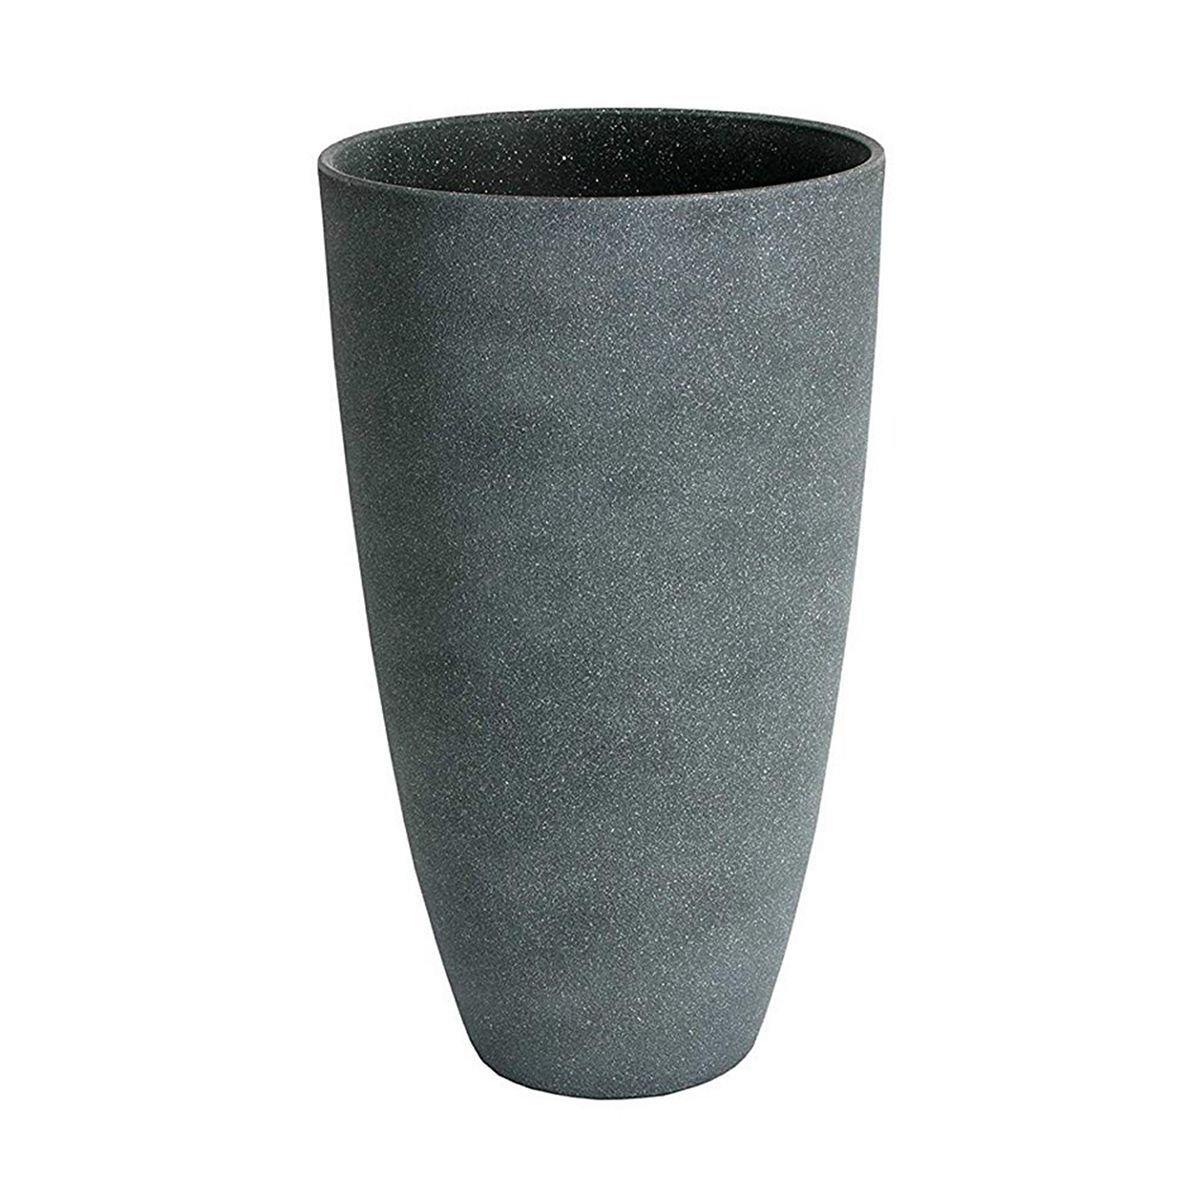 Algreen Acerra Weather Resistant Composite Tall Vase Planter Pot, Gray Stucco | Kohl's